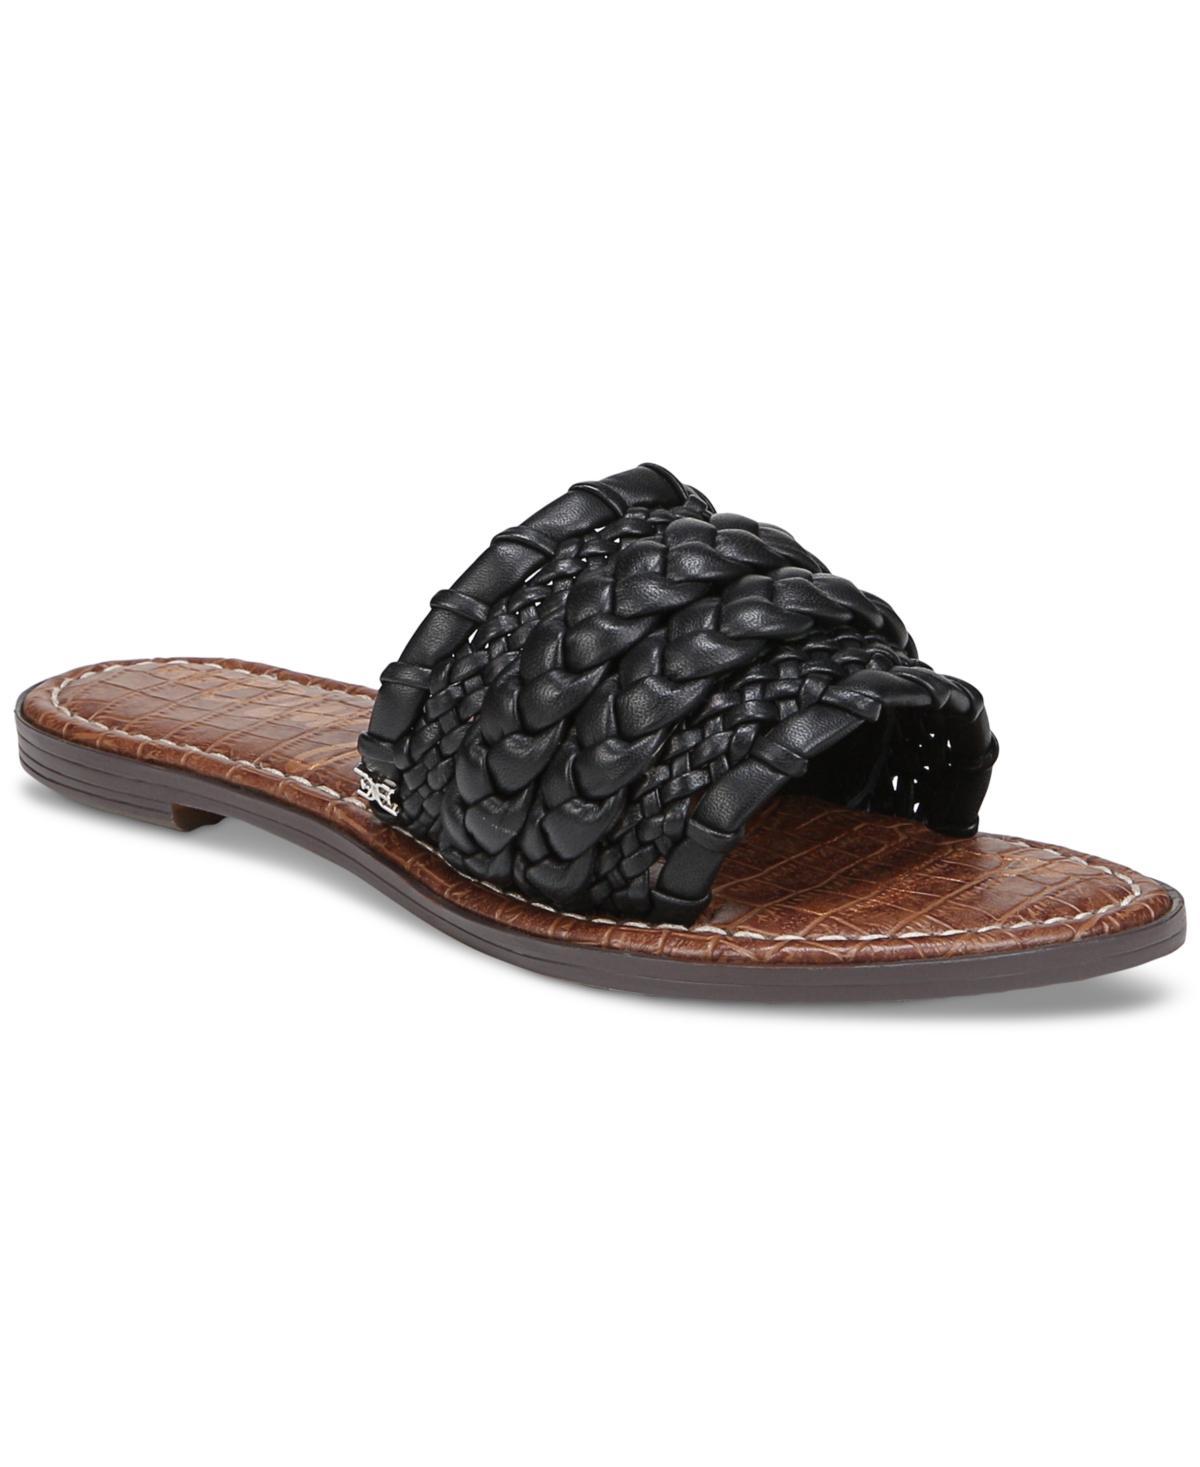 Sam Edelman Giada Braided Slide Sandal Product Image